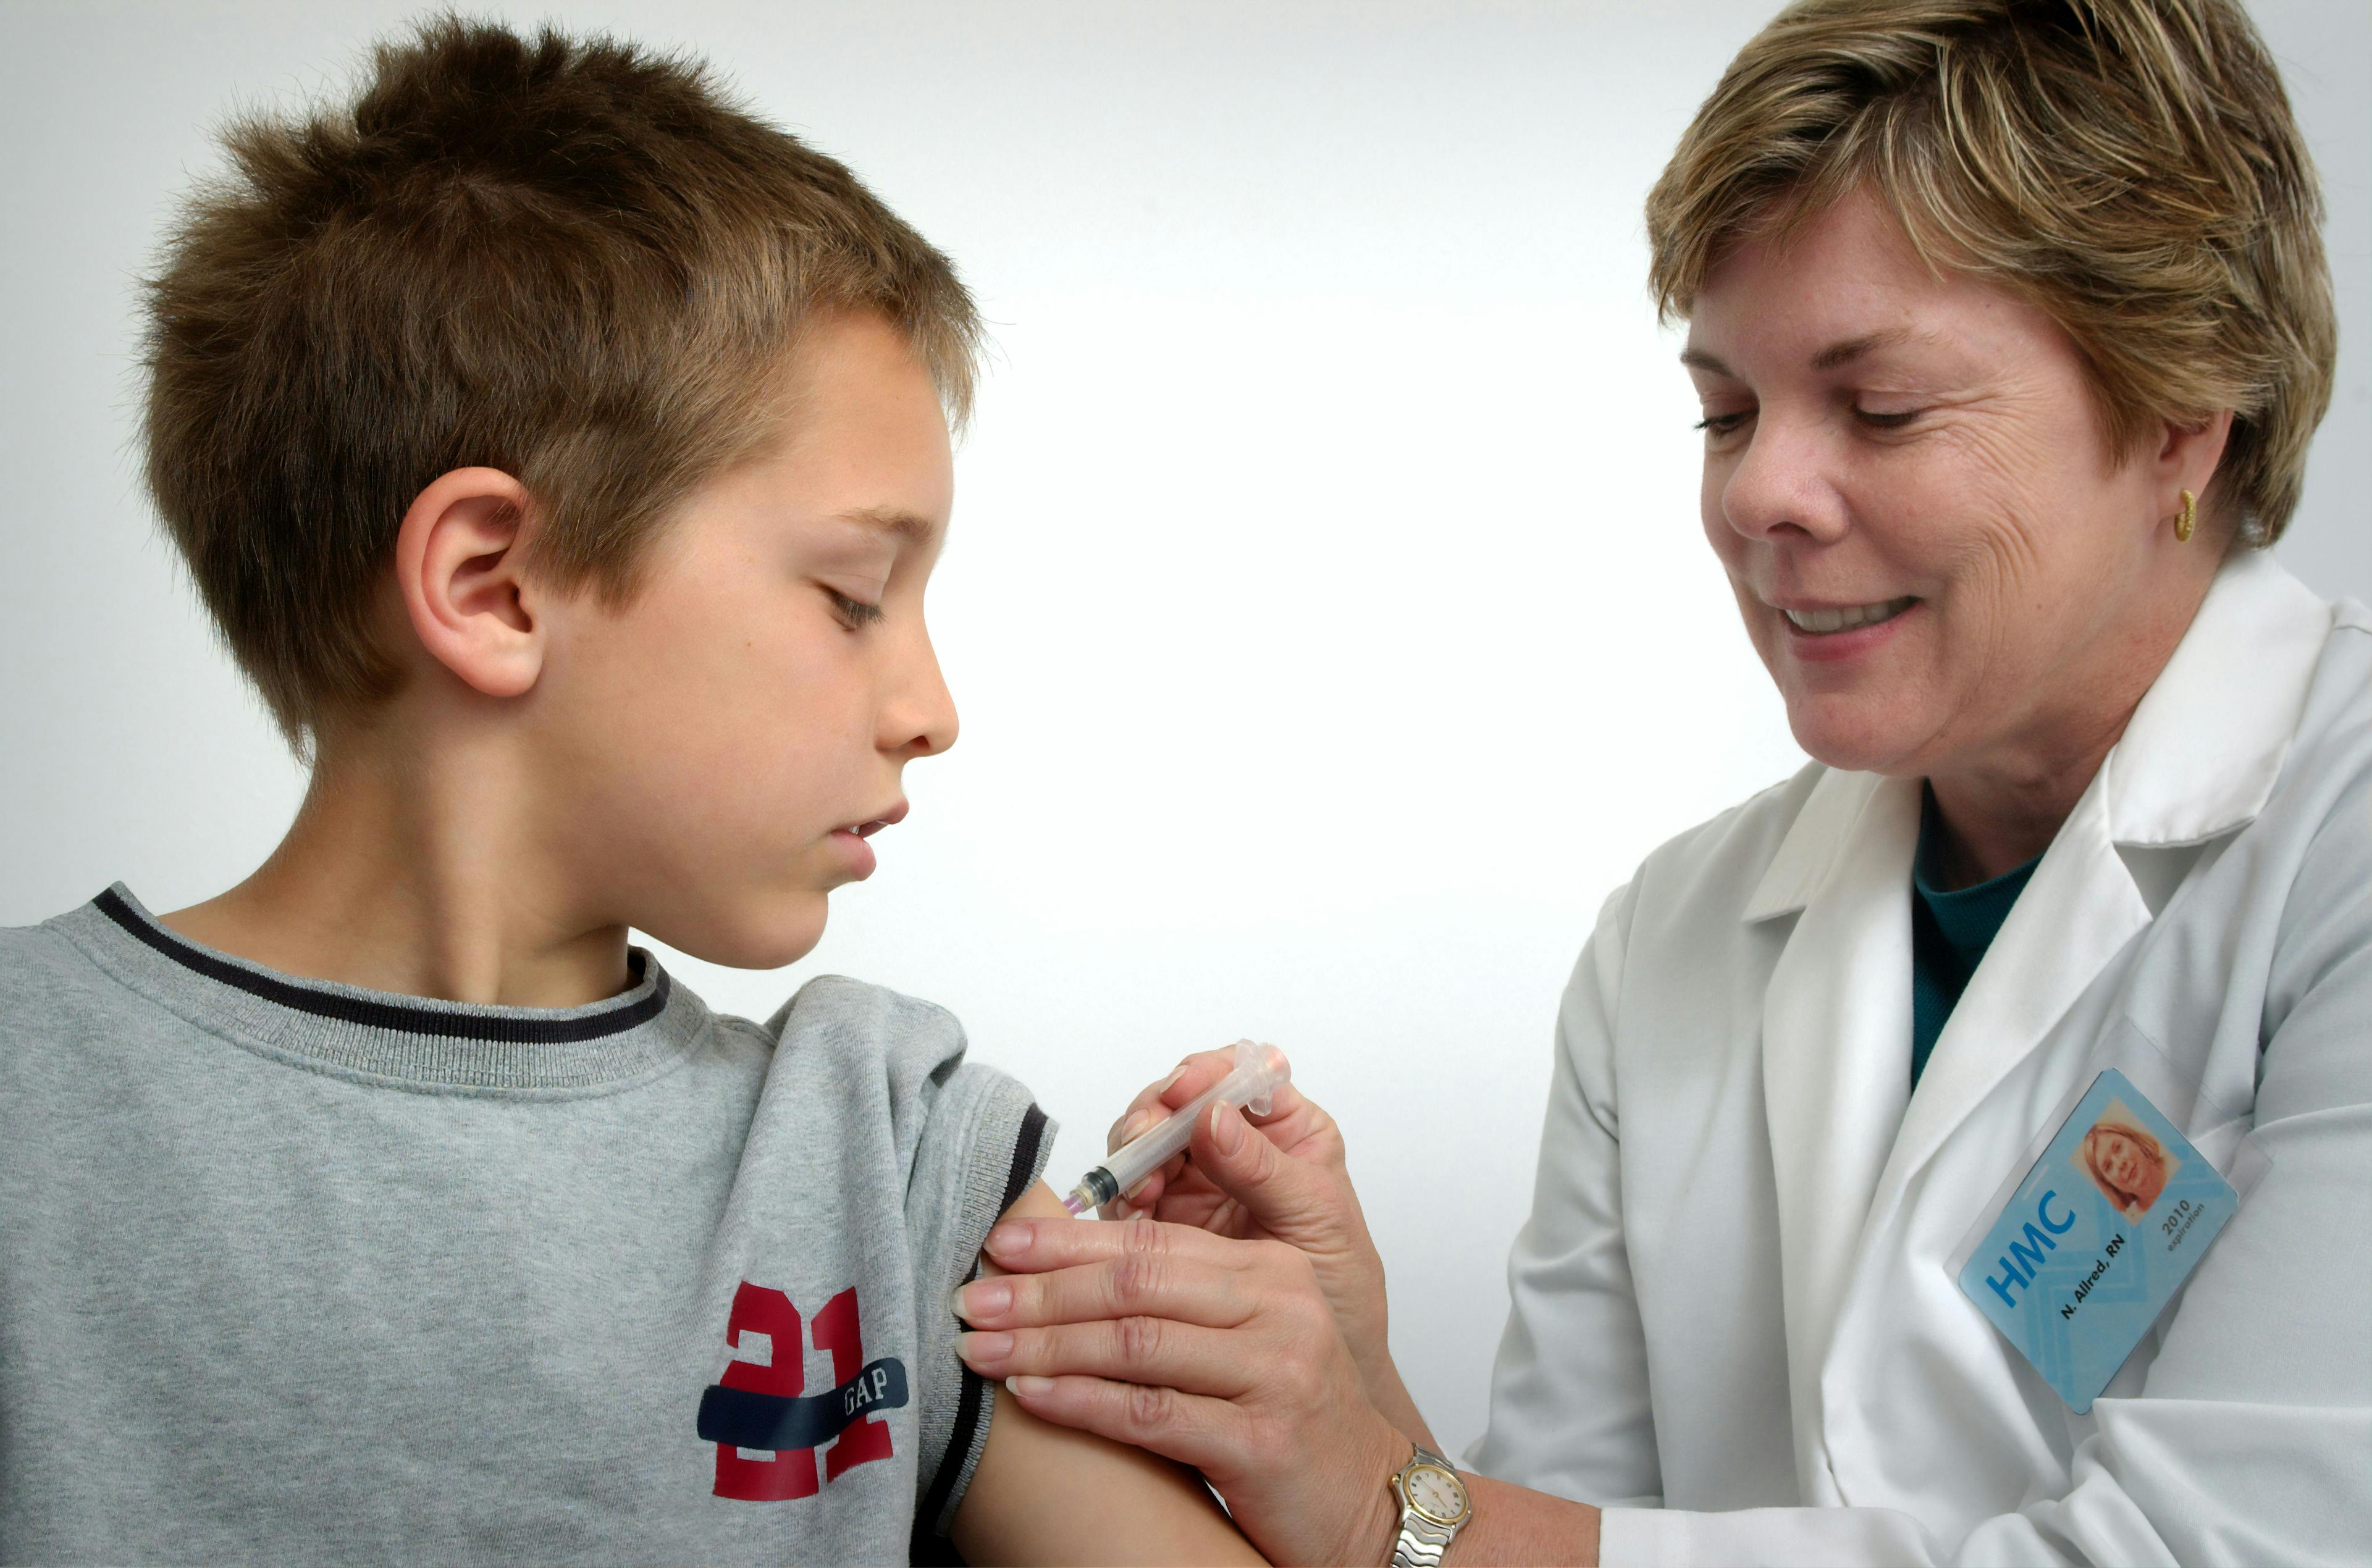 Pfizer-BioNTech COVID-19 Vaccine More than 90% Effective in Children 5-11